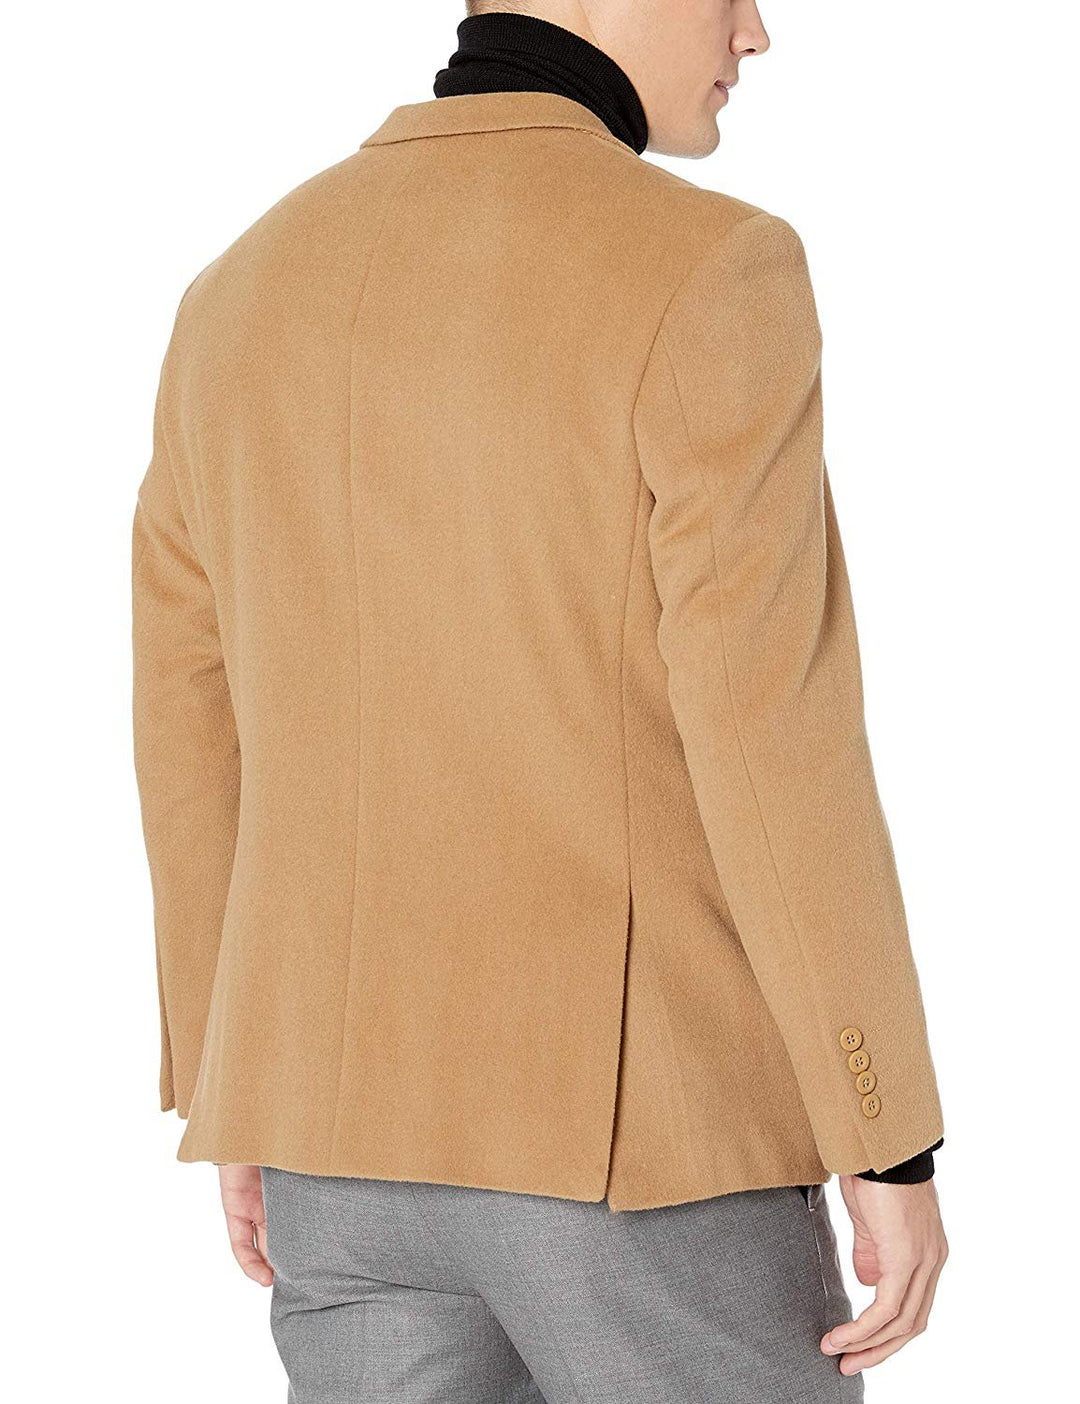 Prontomoda Men's 2 Button Luxury Wool Cashmere Sport Coat - Colors